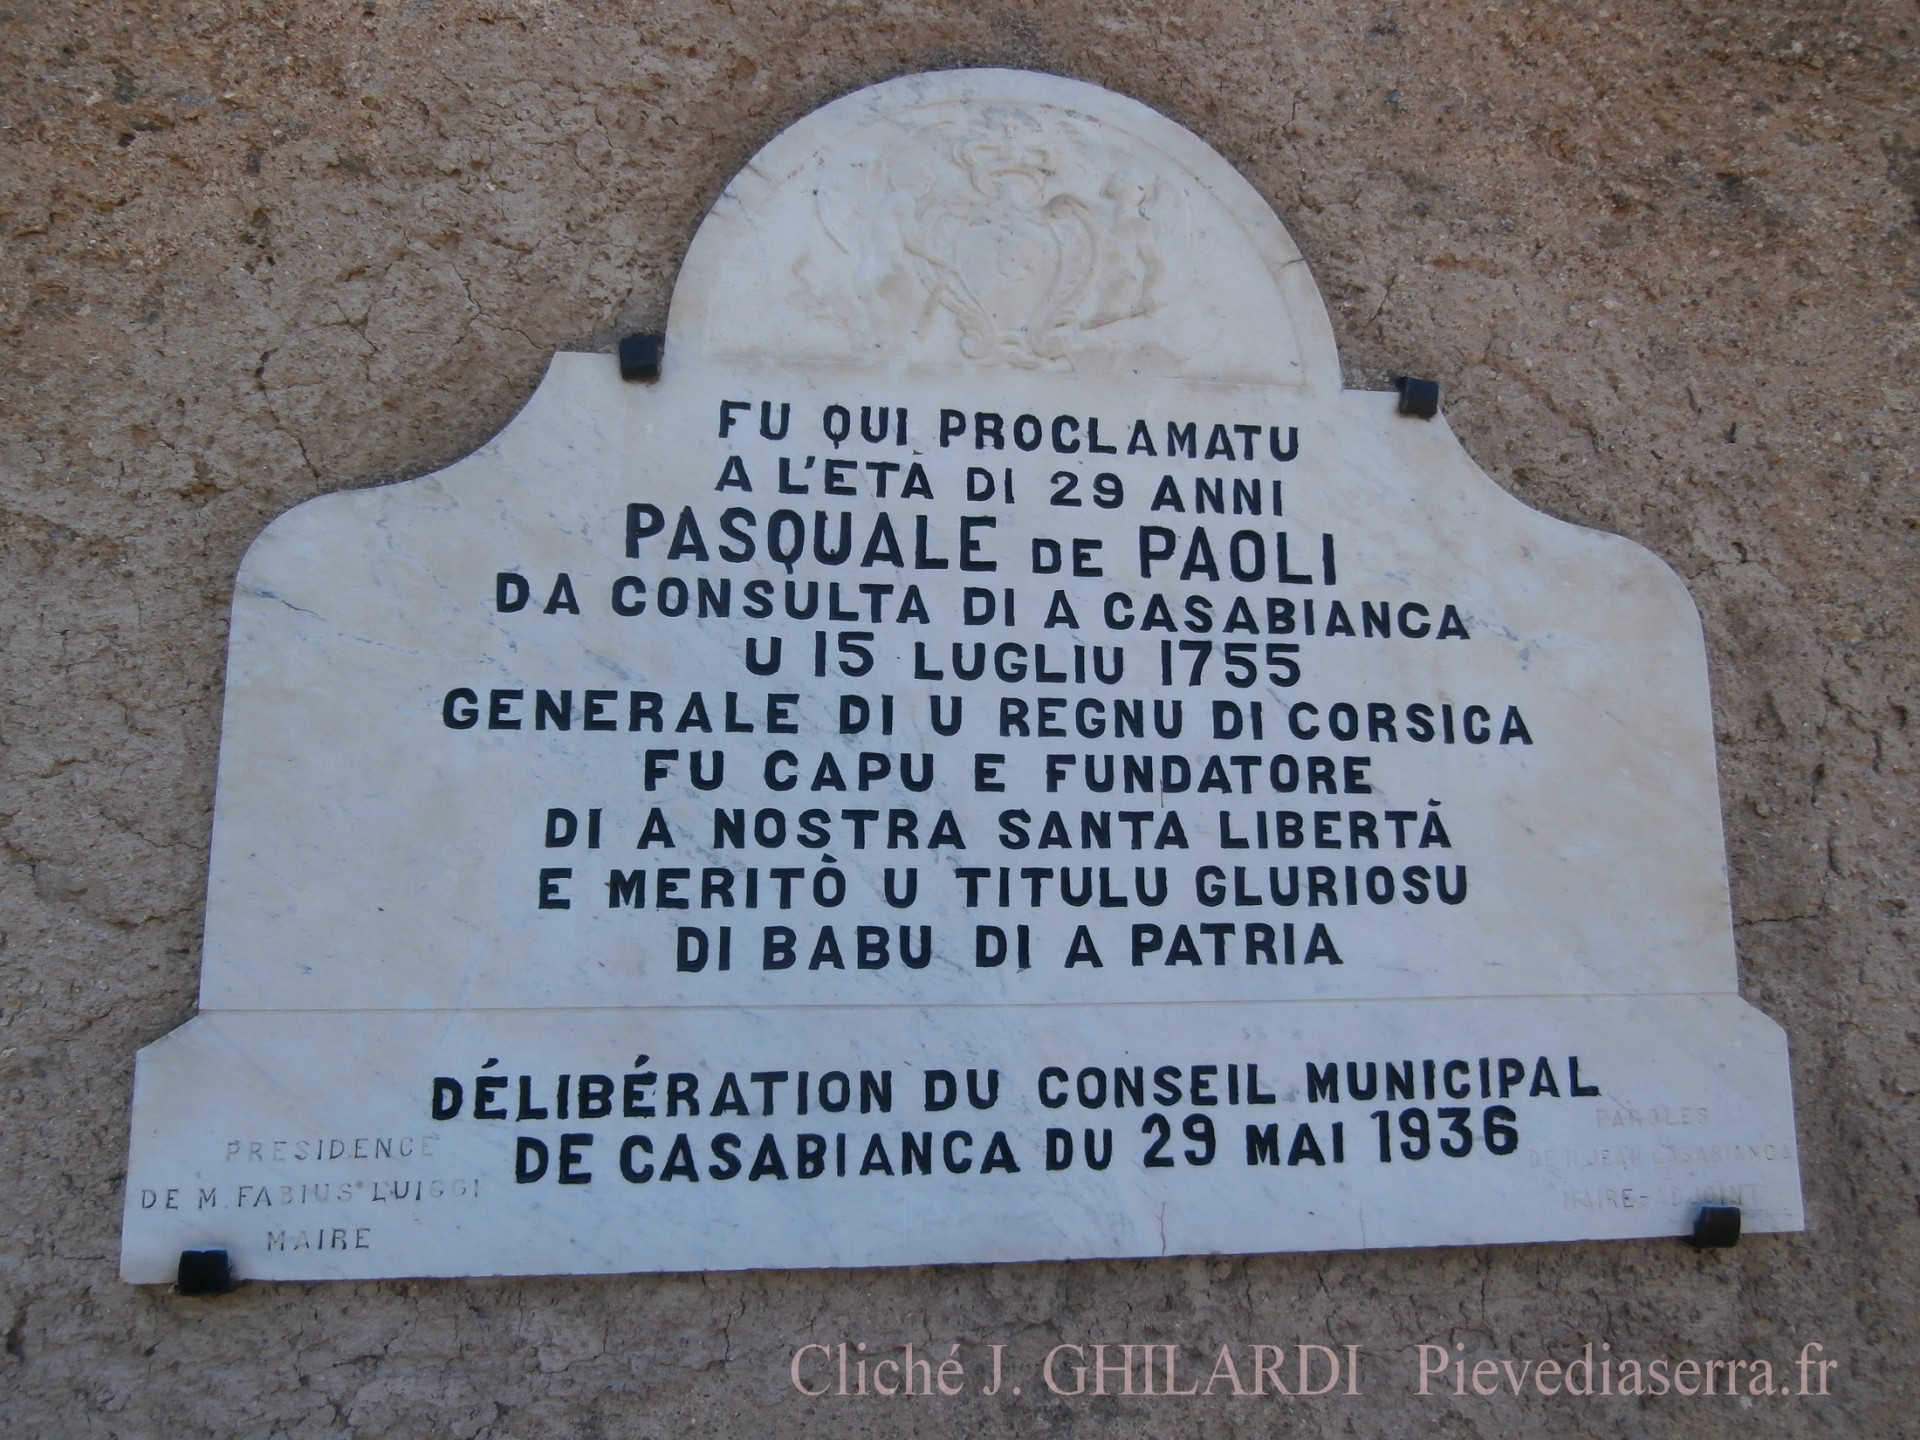 Proclamation de Pasquale PAOLI generale di a nazione